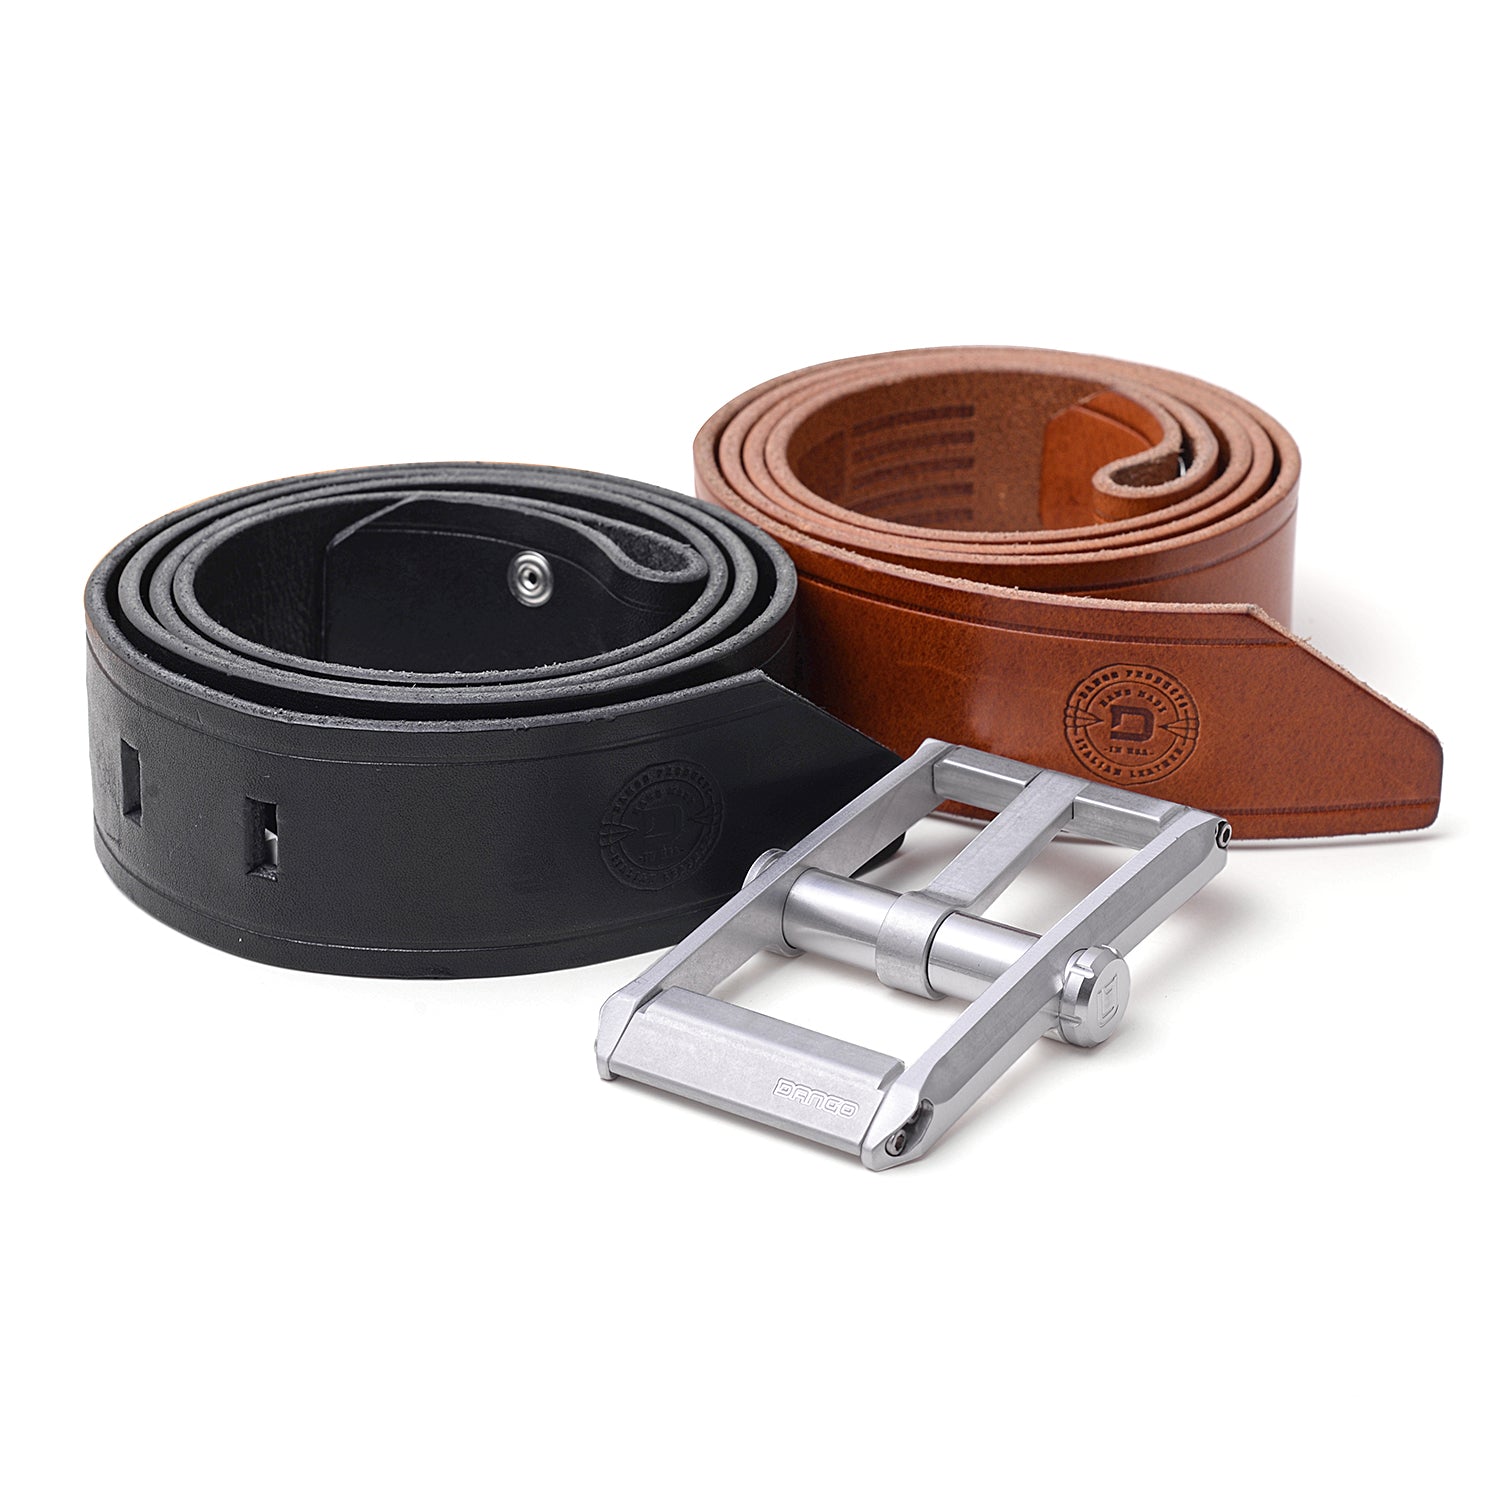 JASGOOD Belt Accessories Leather Loop Keeper, Straps Holder Retainer Band  for 1.3(33mm)/1.1(28mm) Wide Belts/Straps